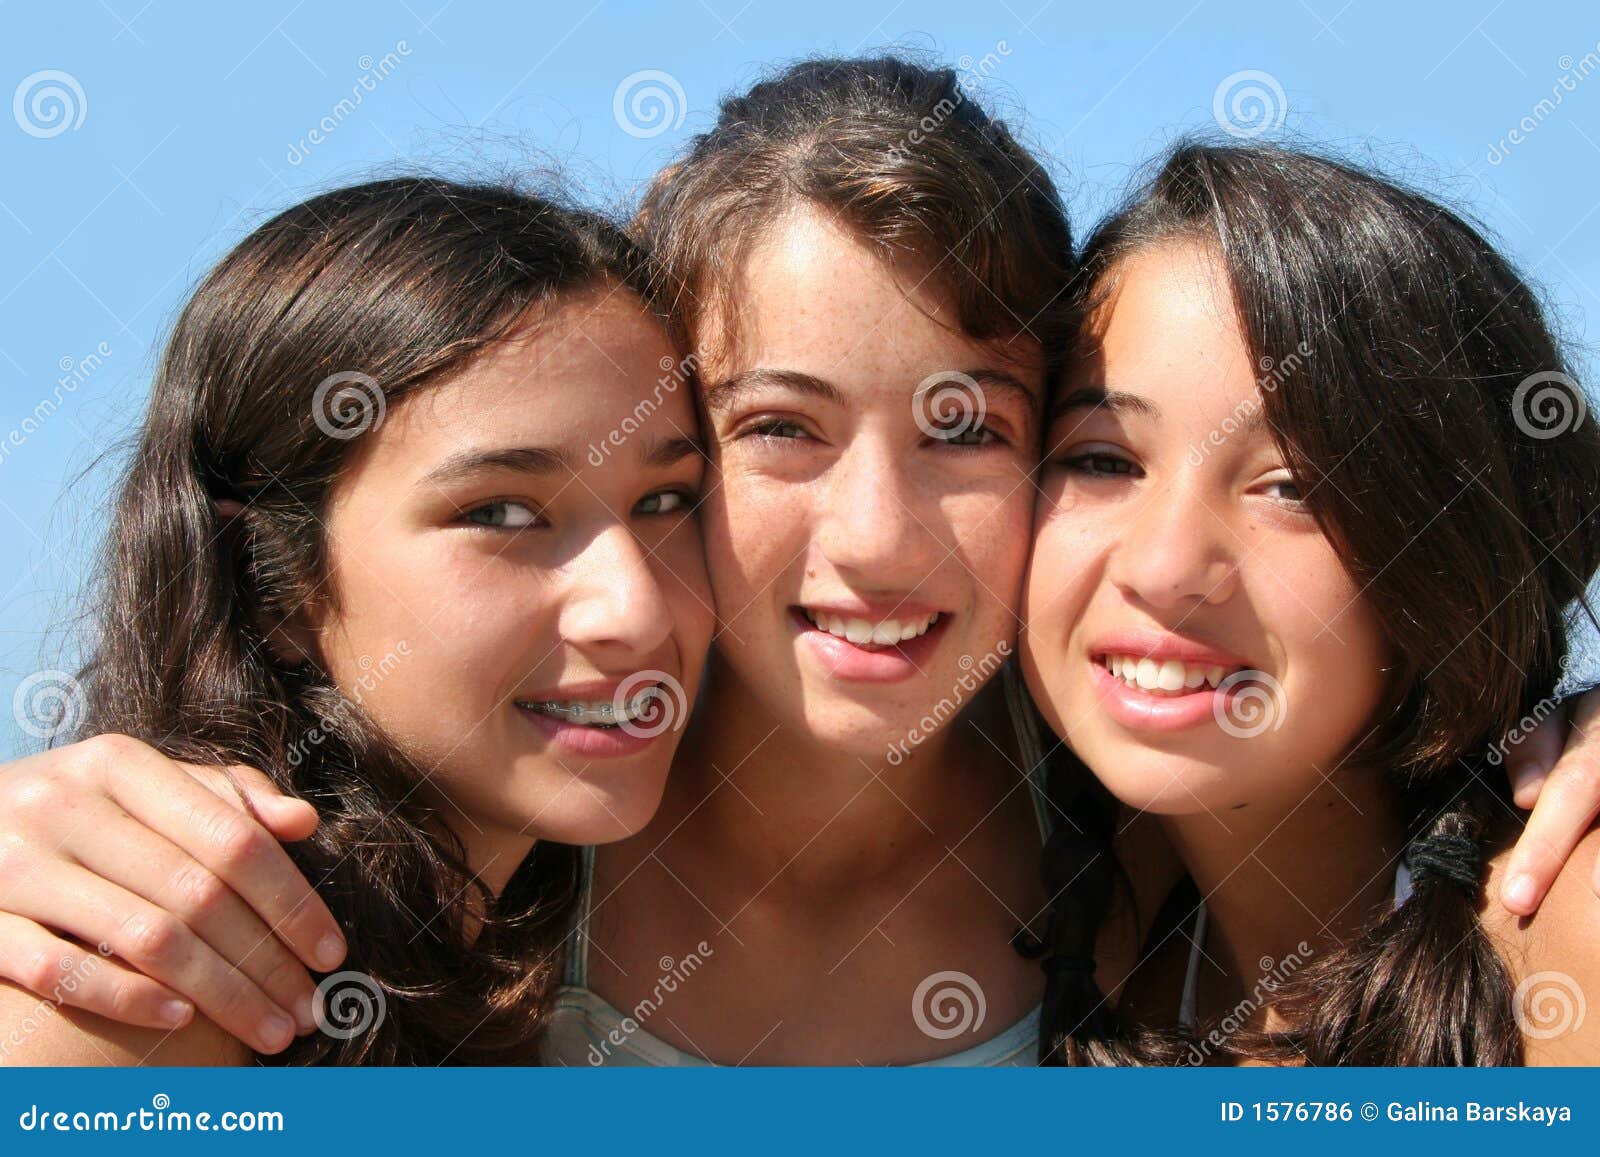 Three happy girls stock photo. Image of people, cute, kids - 1576786